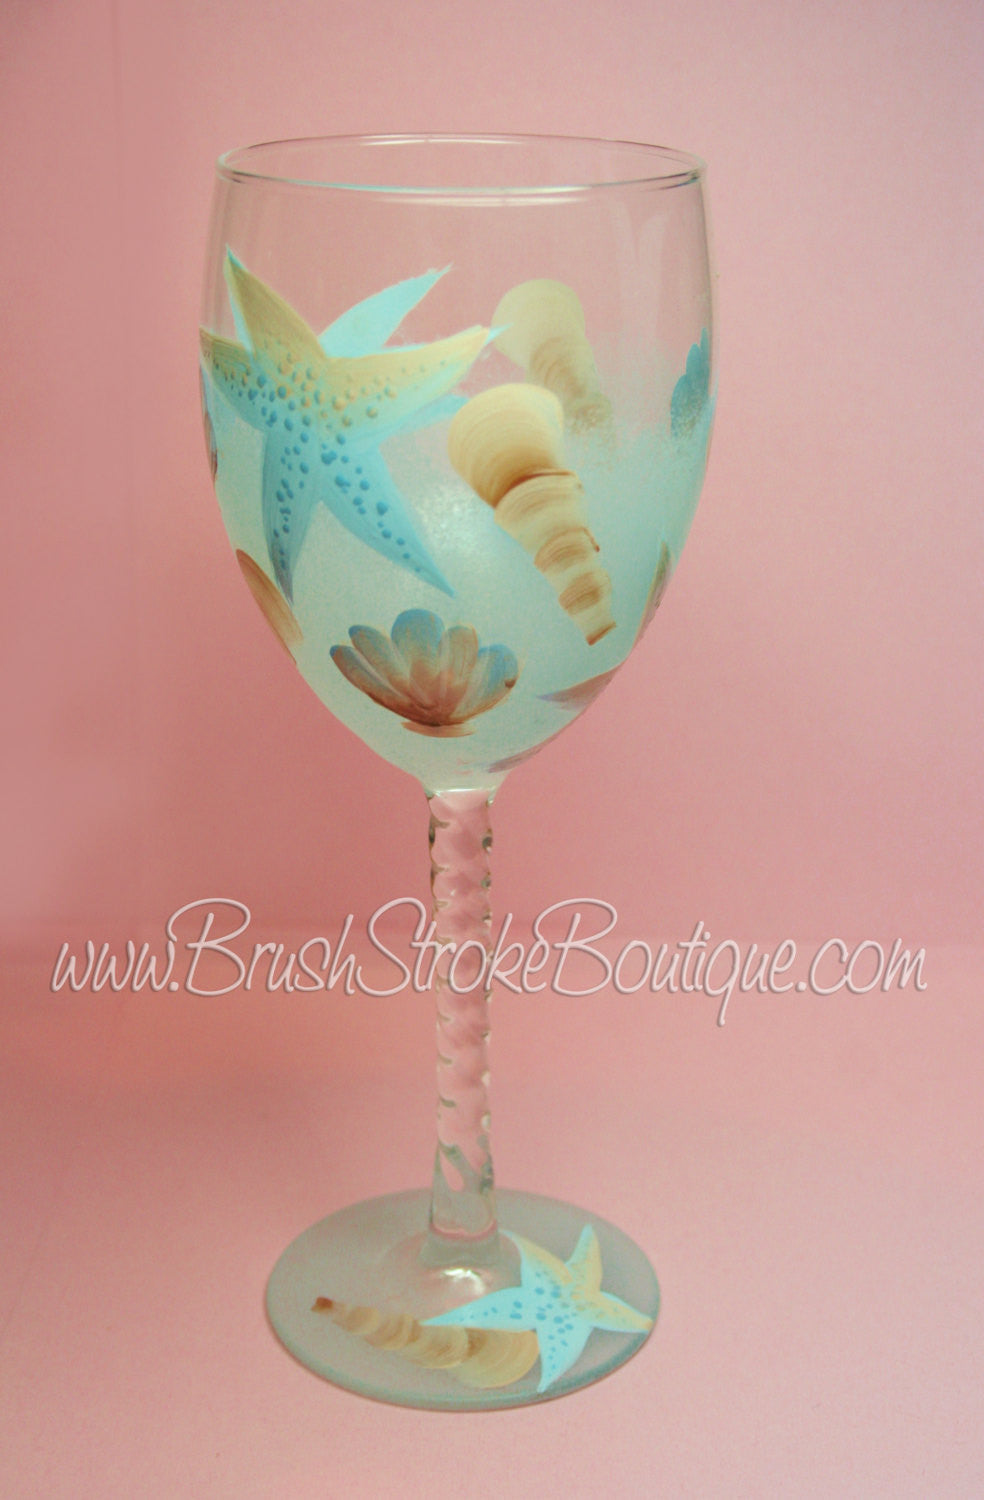 Hand Painted Wine Glass - Sea Shells - Original Designs by Cathy Kraemer